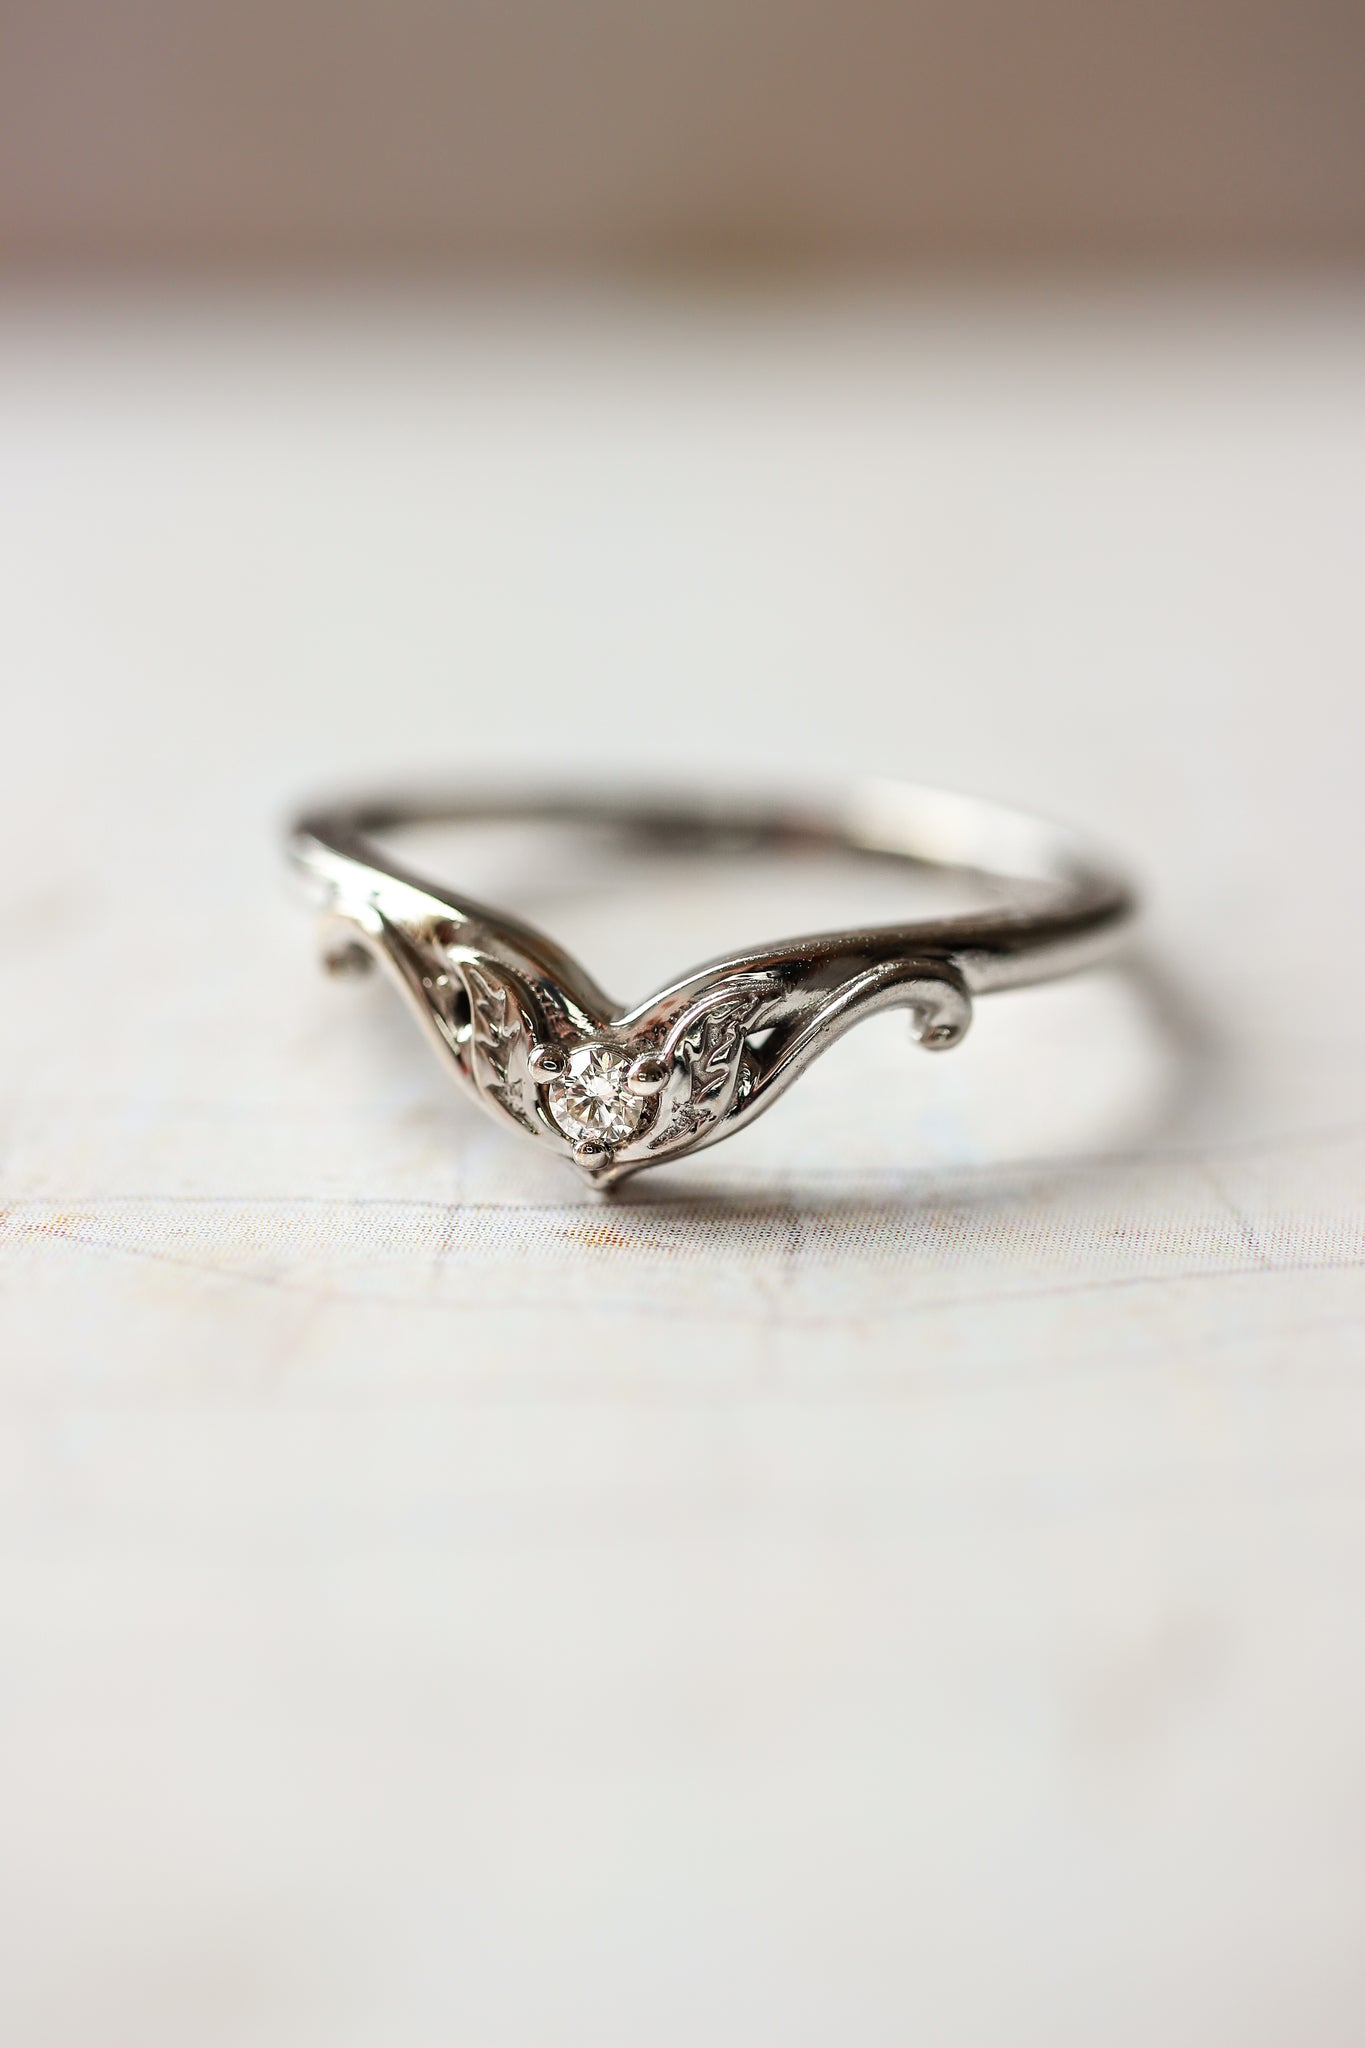 Bridal ring set with red sapphire / Amura - Eden Garden Jewelry™